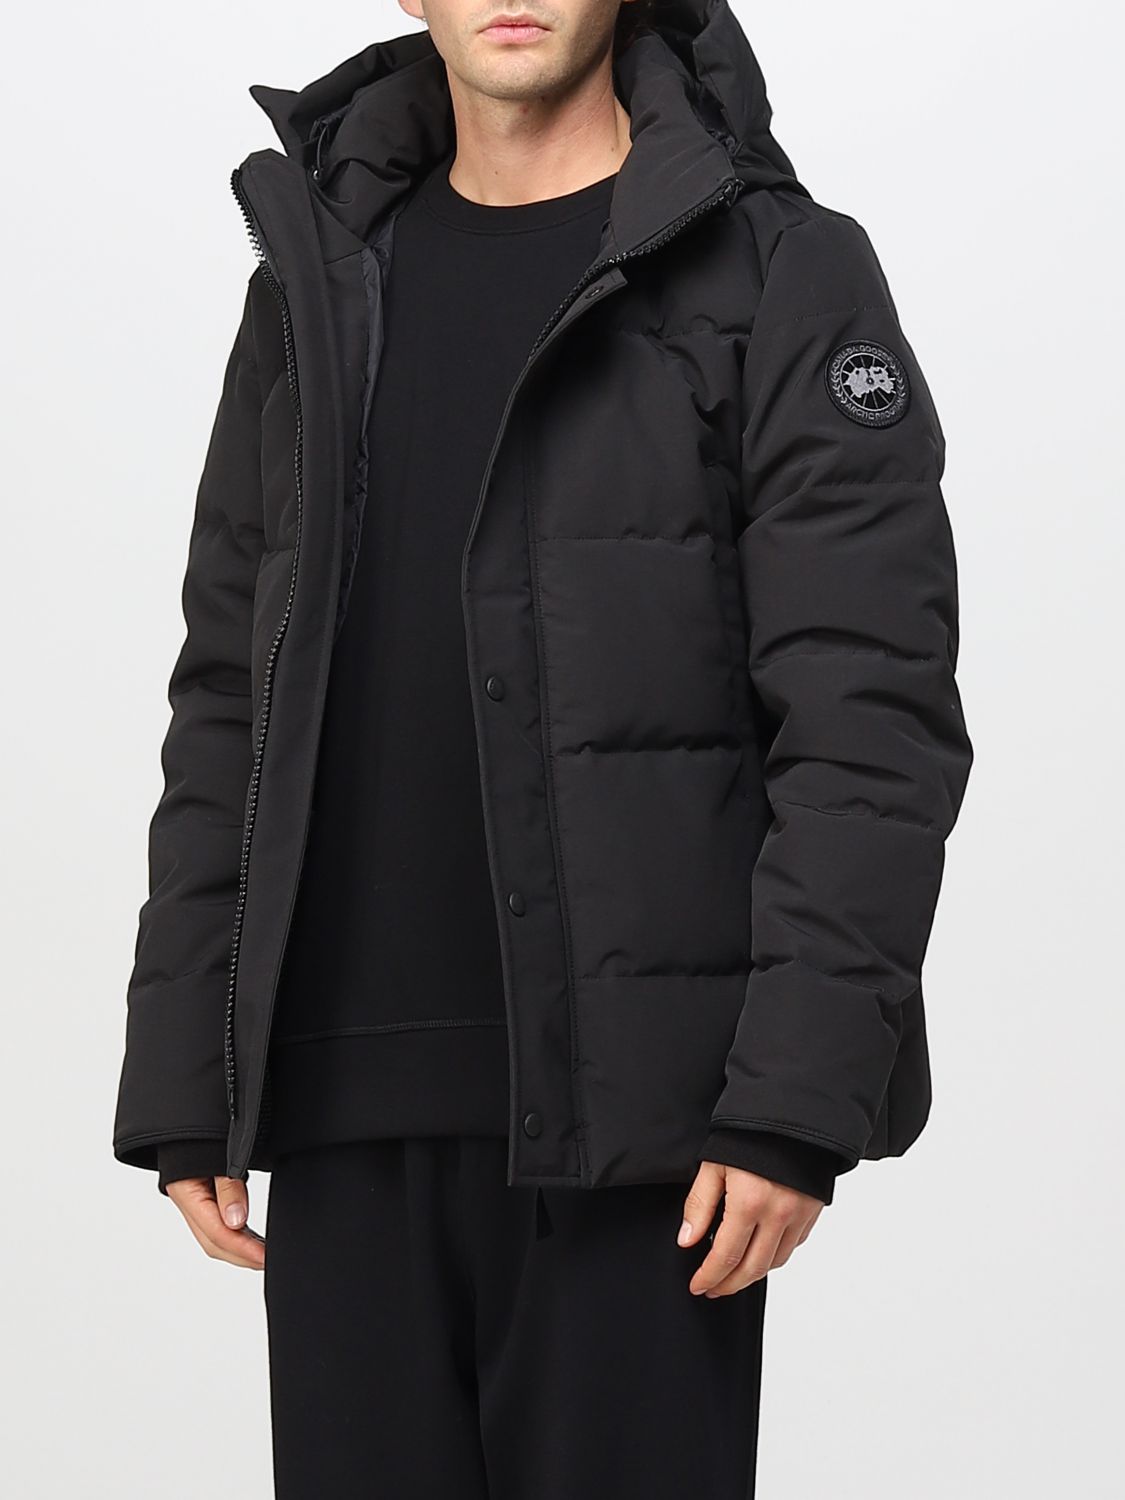 cascade Geneigd zijn Bijna dood CANADA GOOSE: jacket for man - Black | Canada Goose jacket 2048MB43 online  on GIGLIO.COM